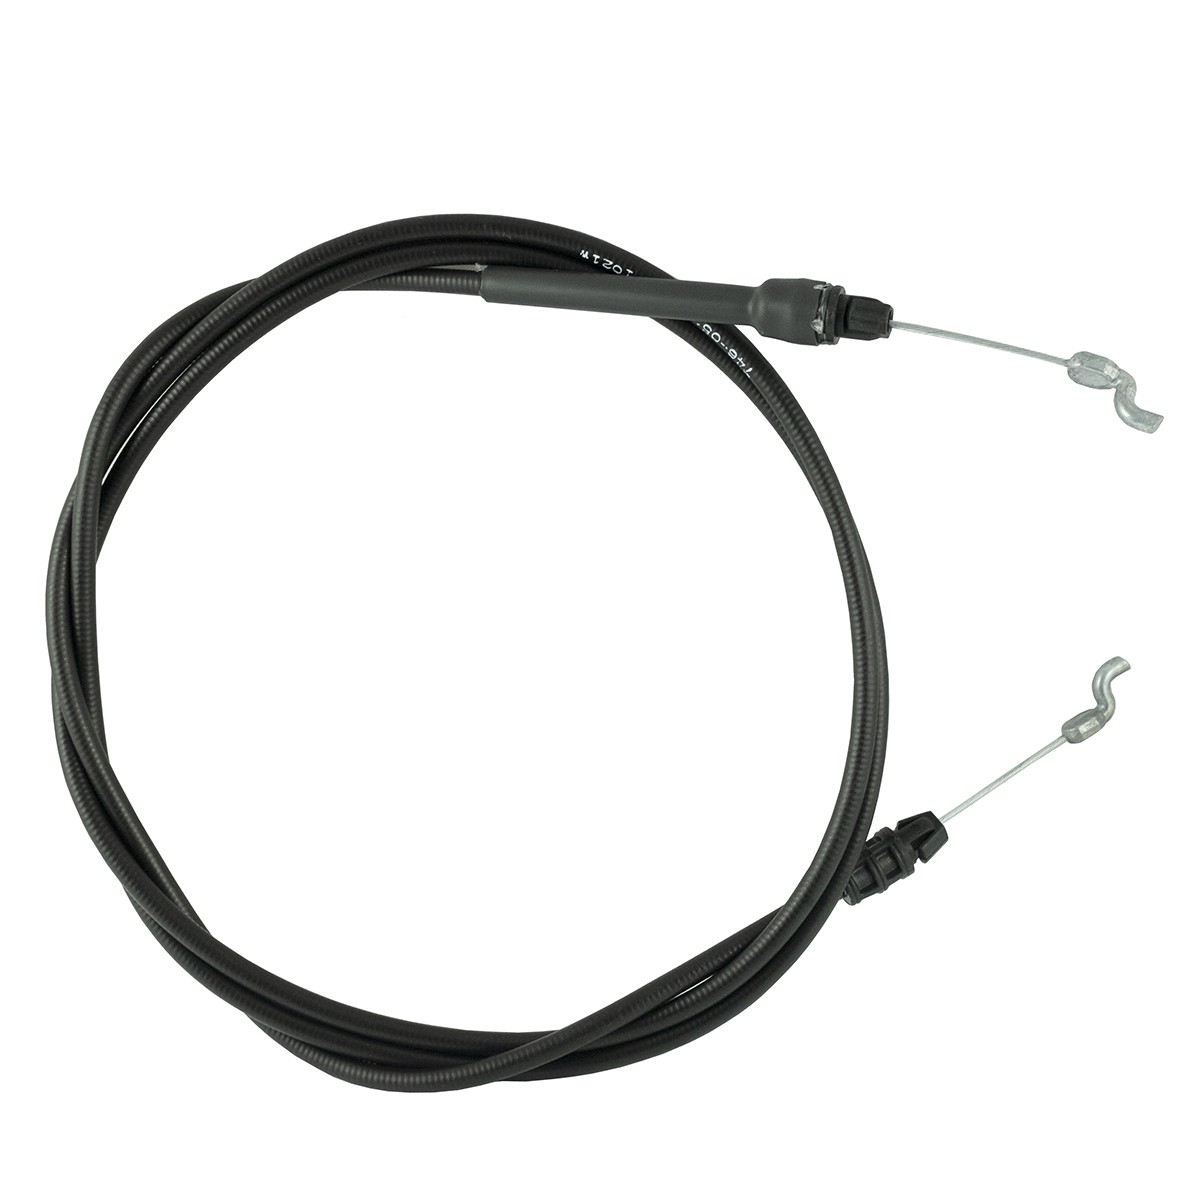 Clutch cable 1620/1760 mm for MTD 746-05105A, Cub Cadet, Craftsman petrol lawn mower